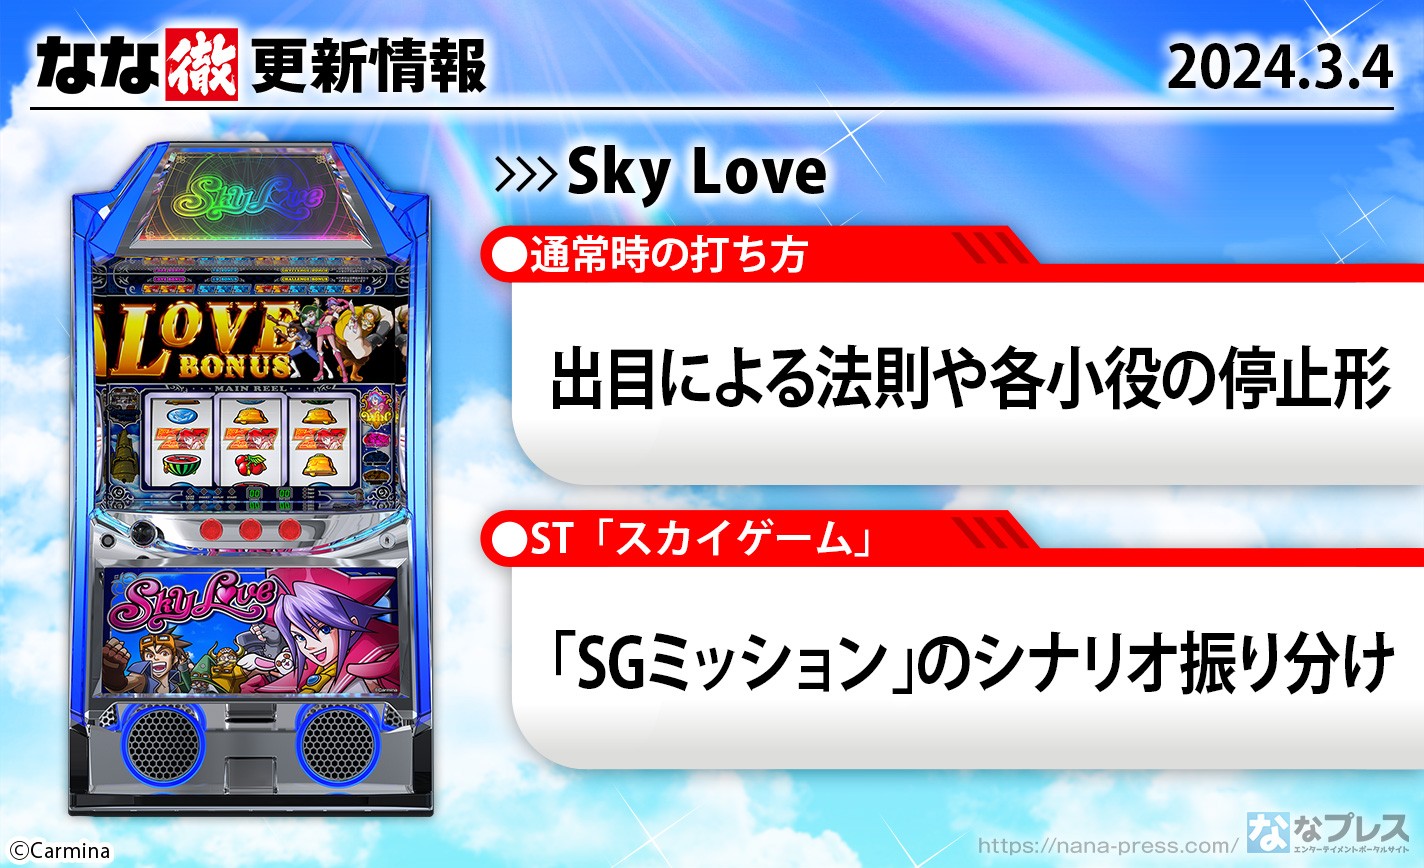 【Sky Love】通常時の打ち方や各小役の停止形、「SGミッション」発展時のシナリオ振り分けを更新しました。【3月4日解析情報更新】 eyecatch-image